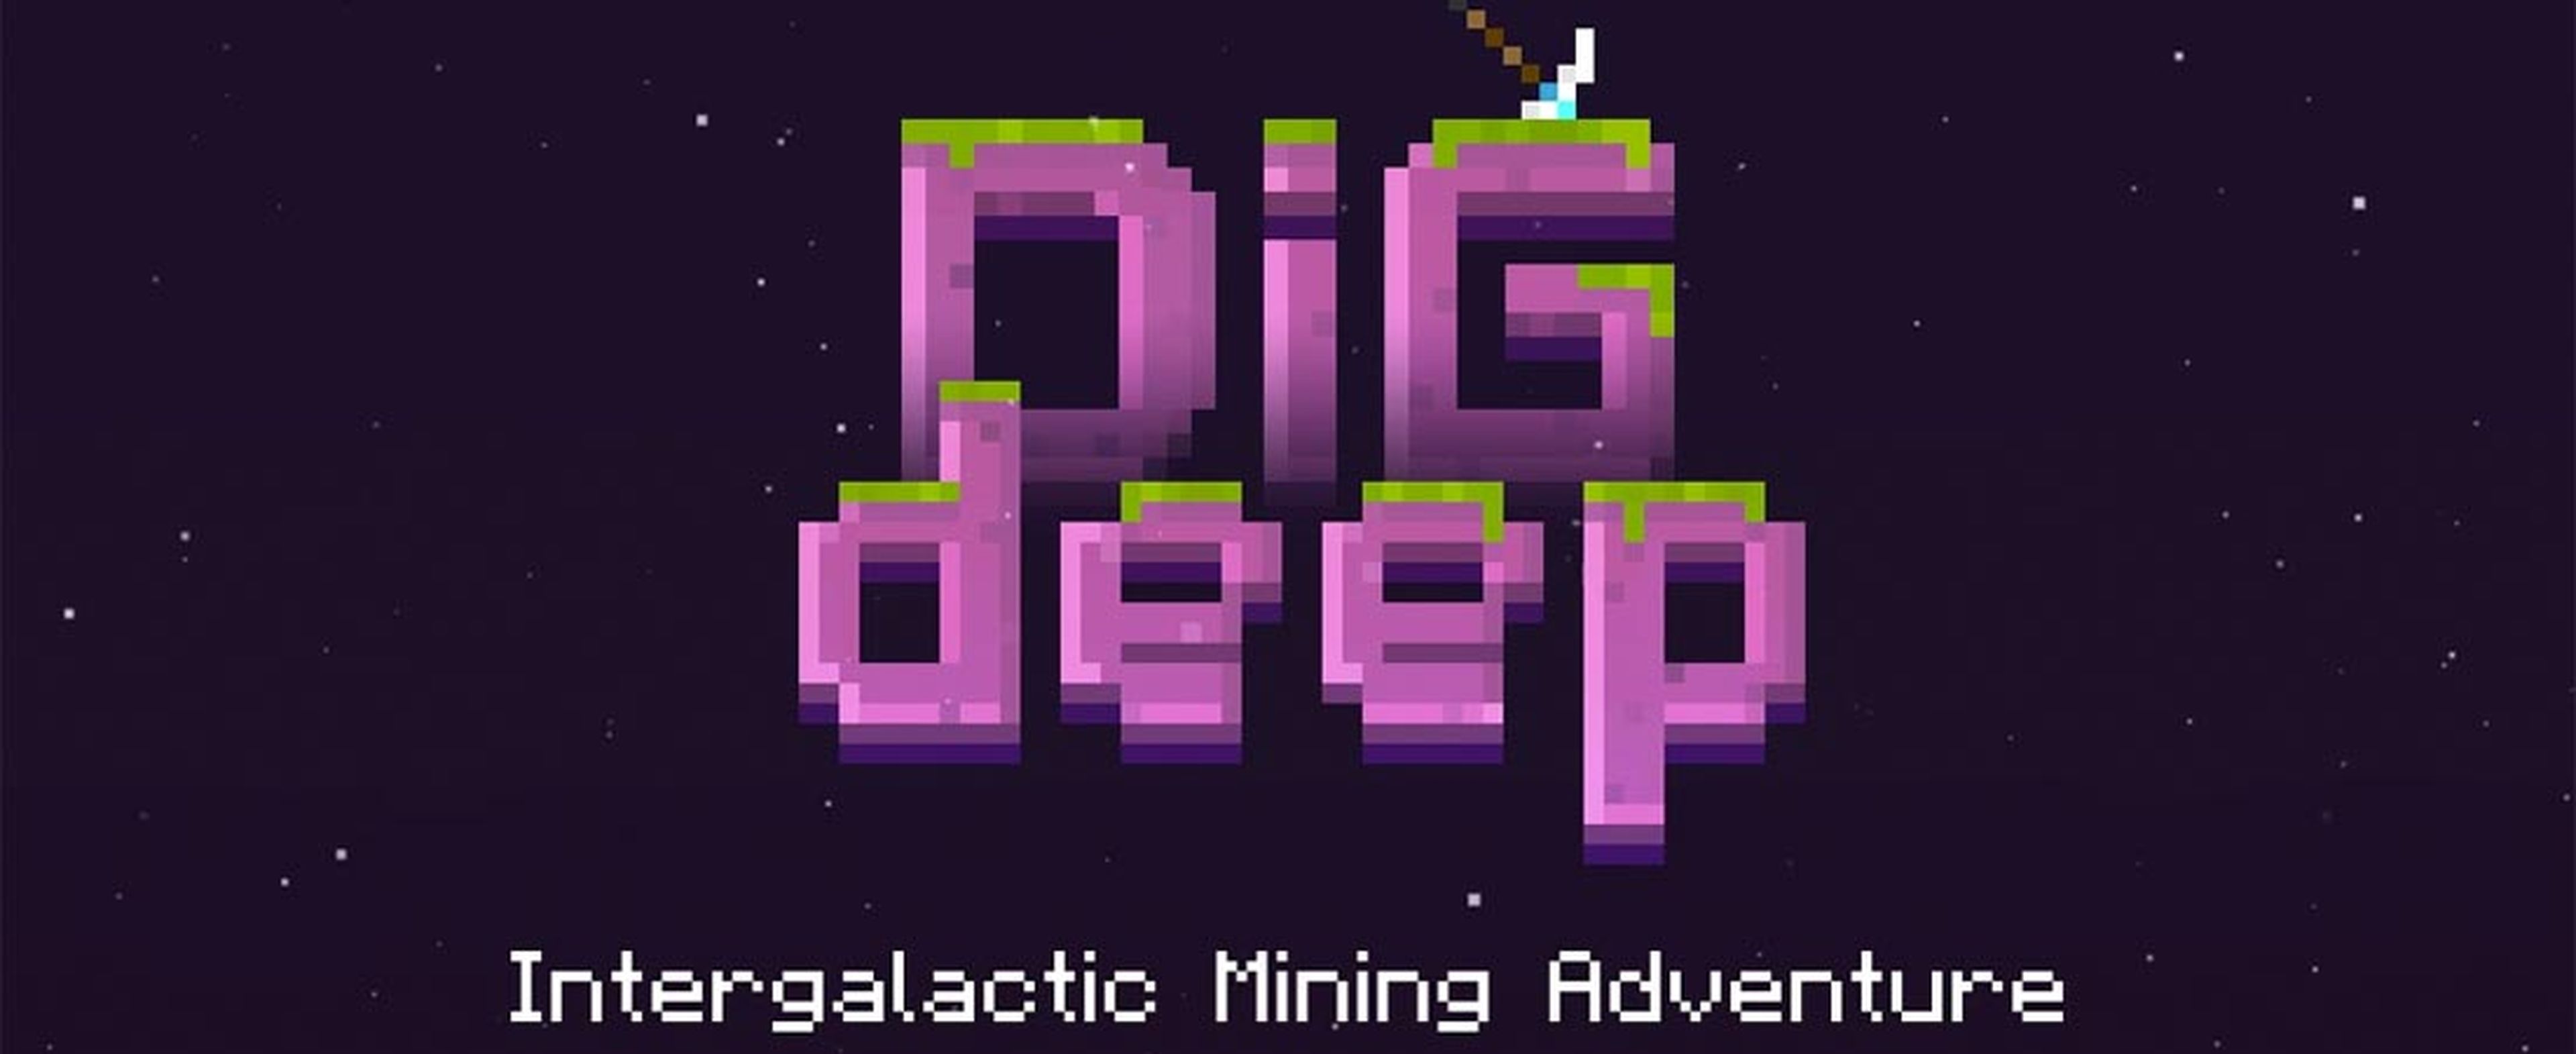 Dig Deep ya disponible para iOS